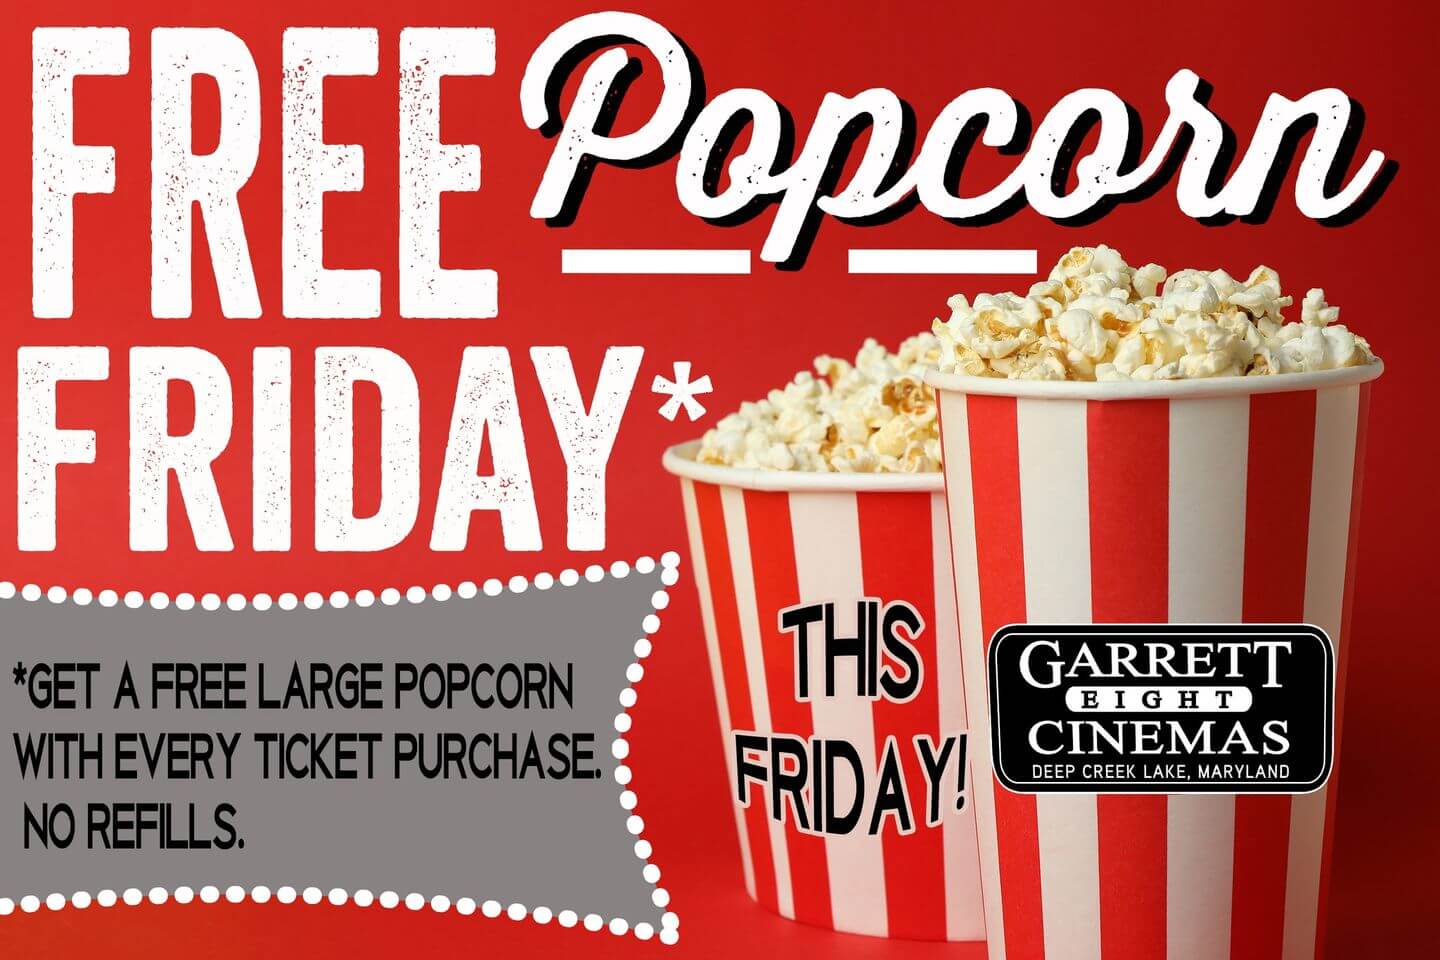 Garrett 8 Cinemas: Free Popcorn Friday at Deep Creek Lake, MD